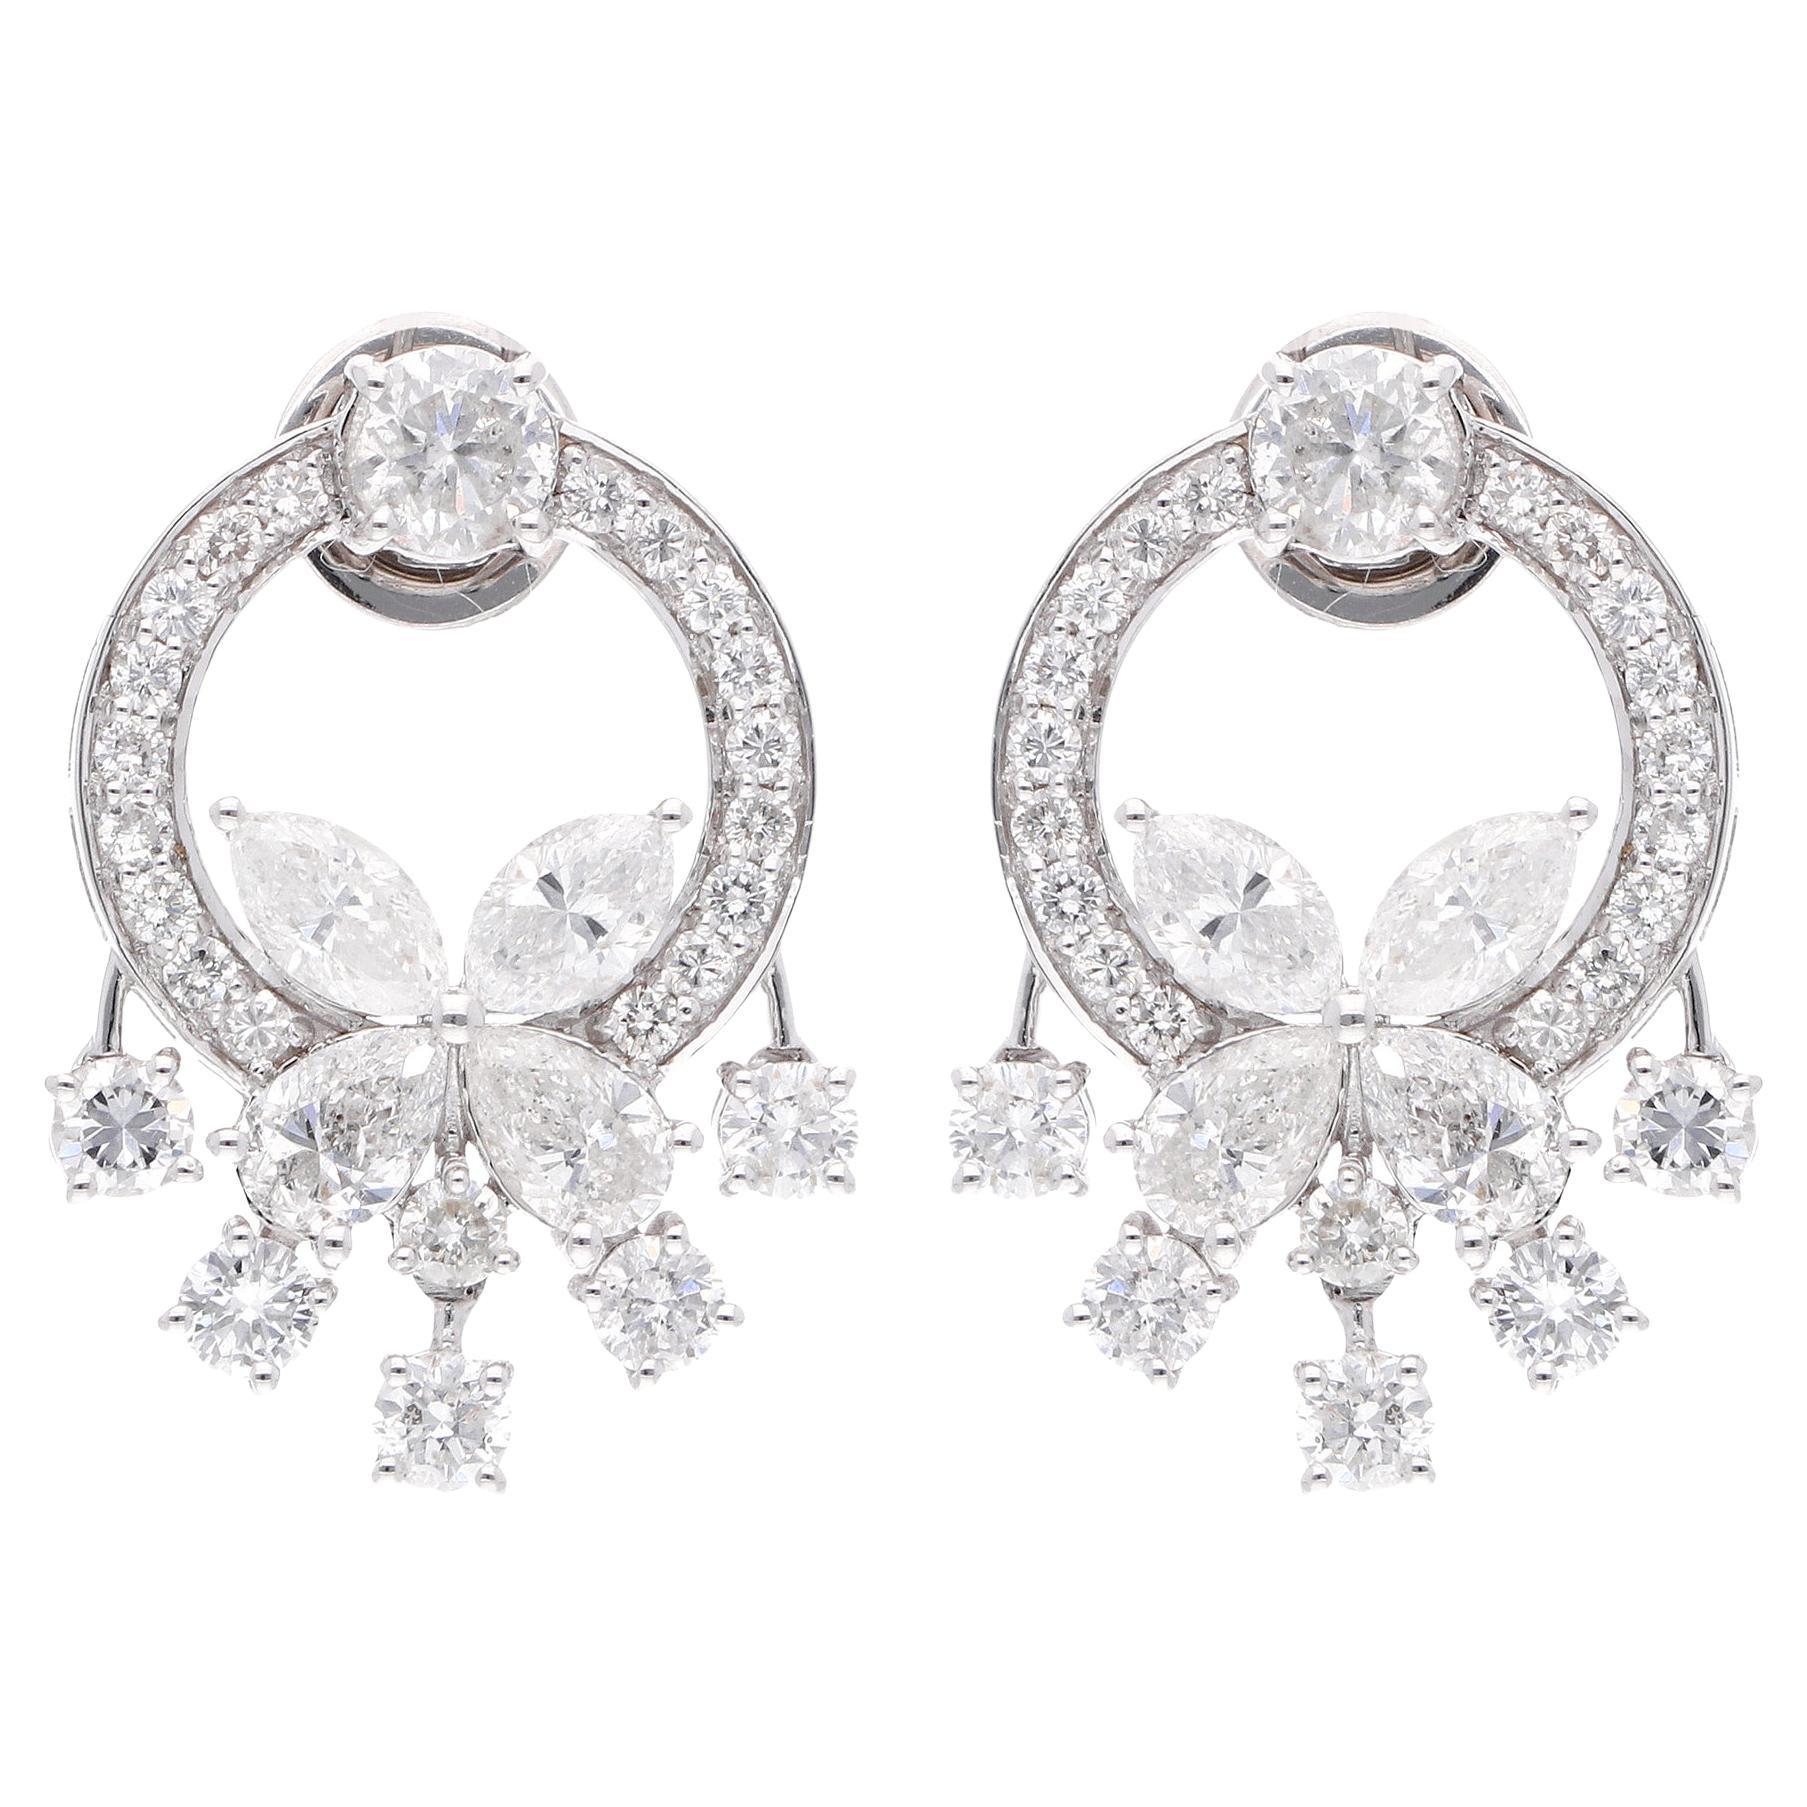  5.51 Carat SI Clarity HI Color Diamond Dangle Earrings 18 Karat White Gold For Sale